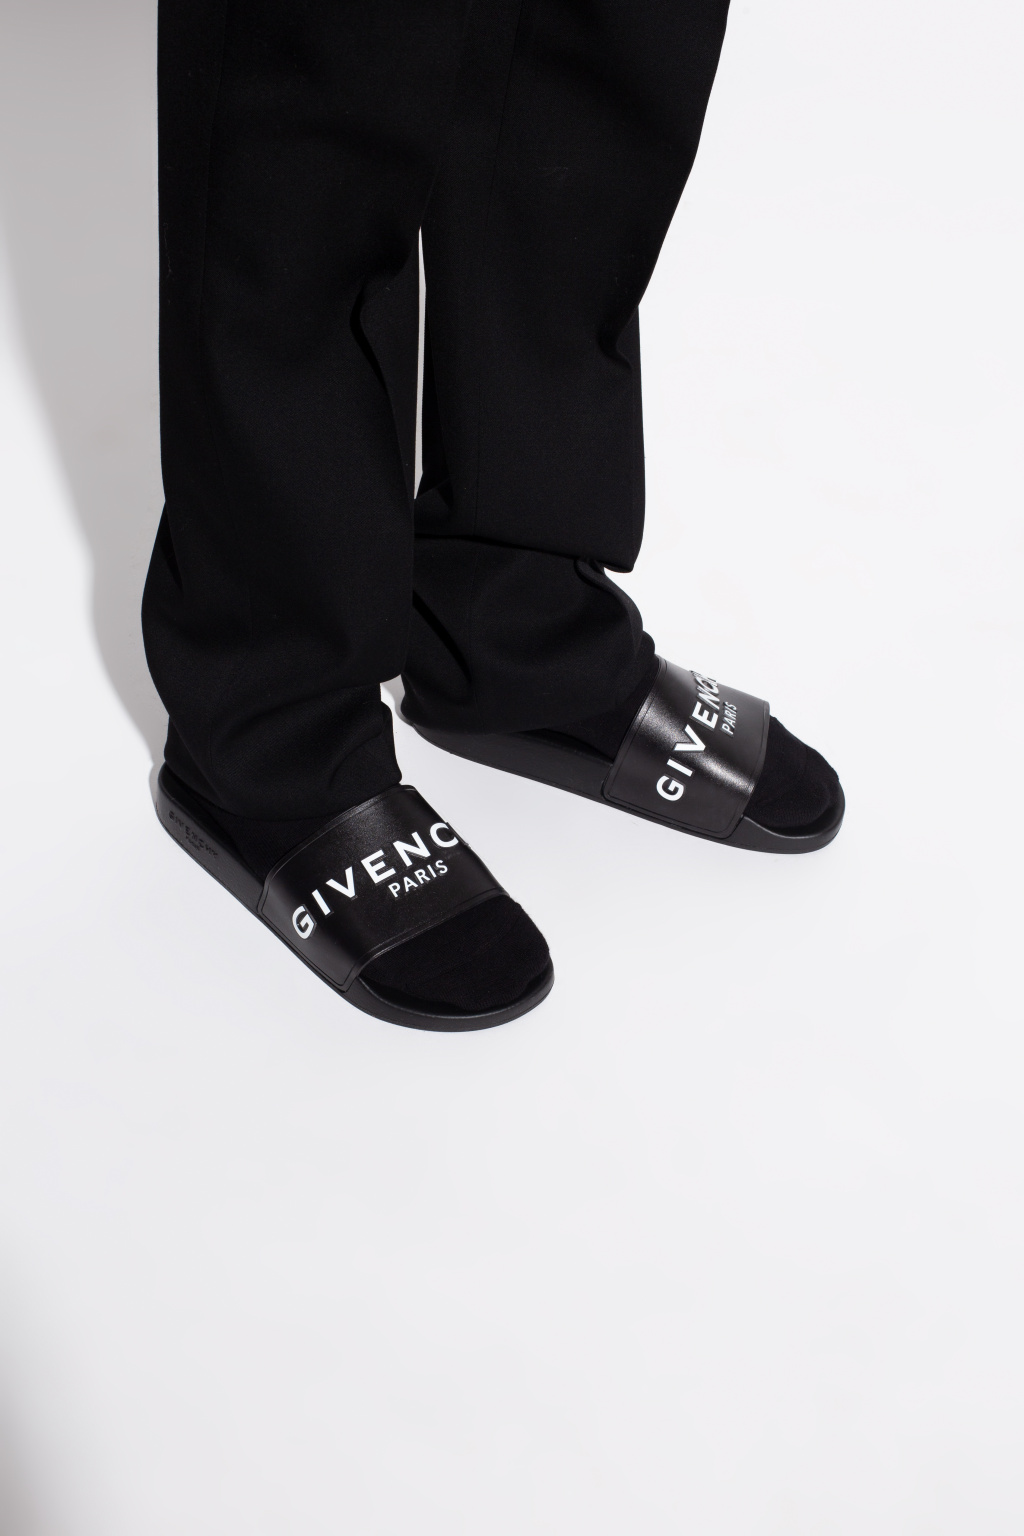 Givenchy Slides with logo | Men's Shoes | Vitkac